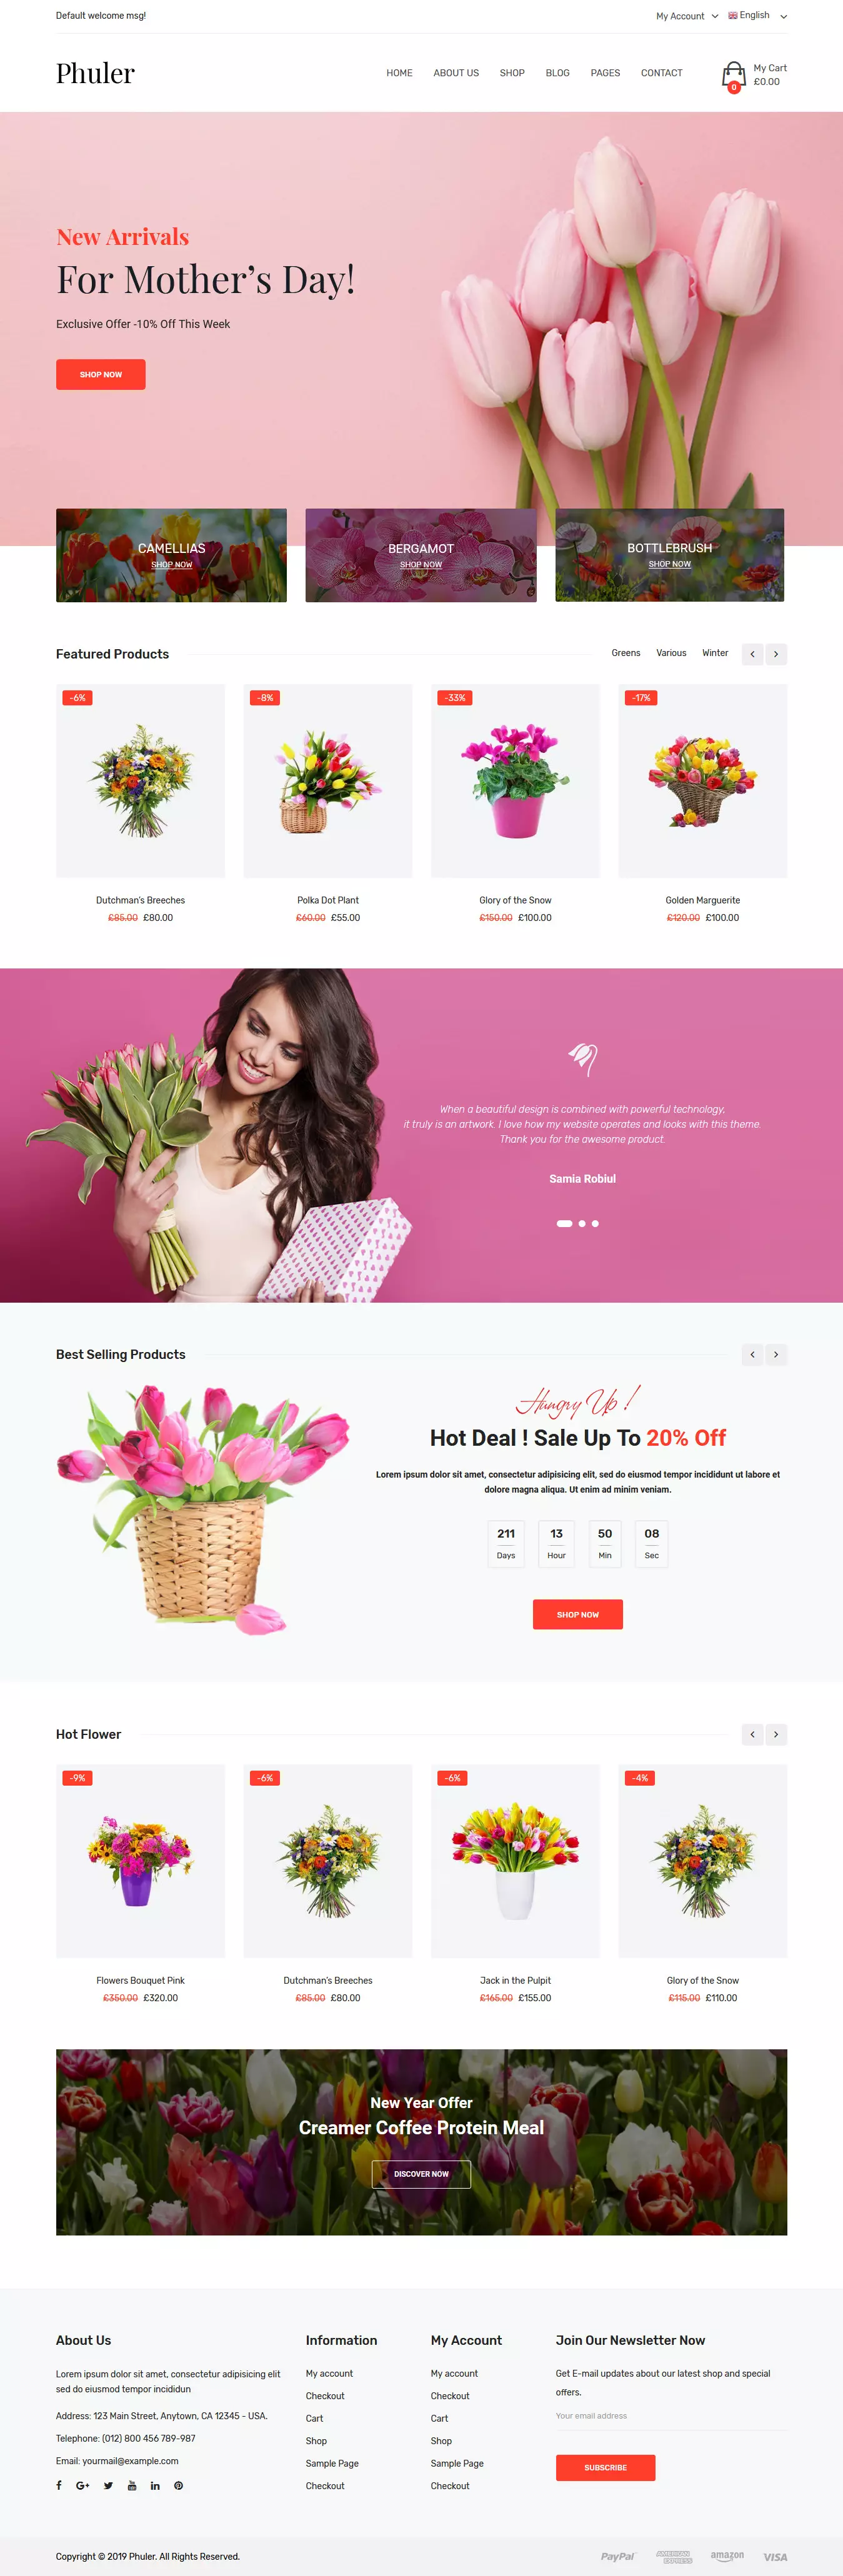 Phuler - Best Premium Florist and Floriculture WordPress Theme